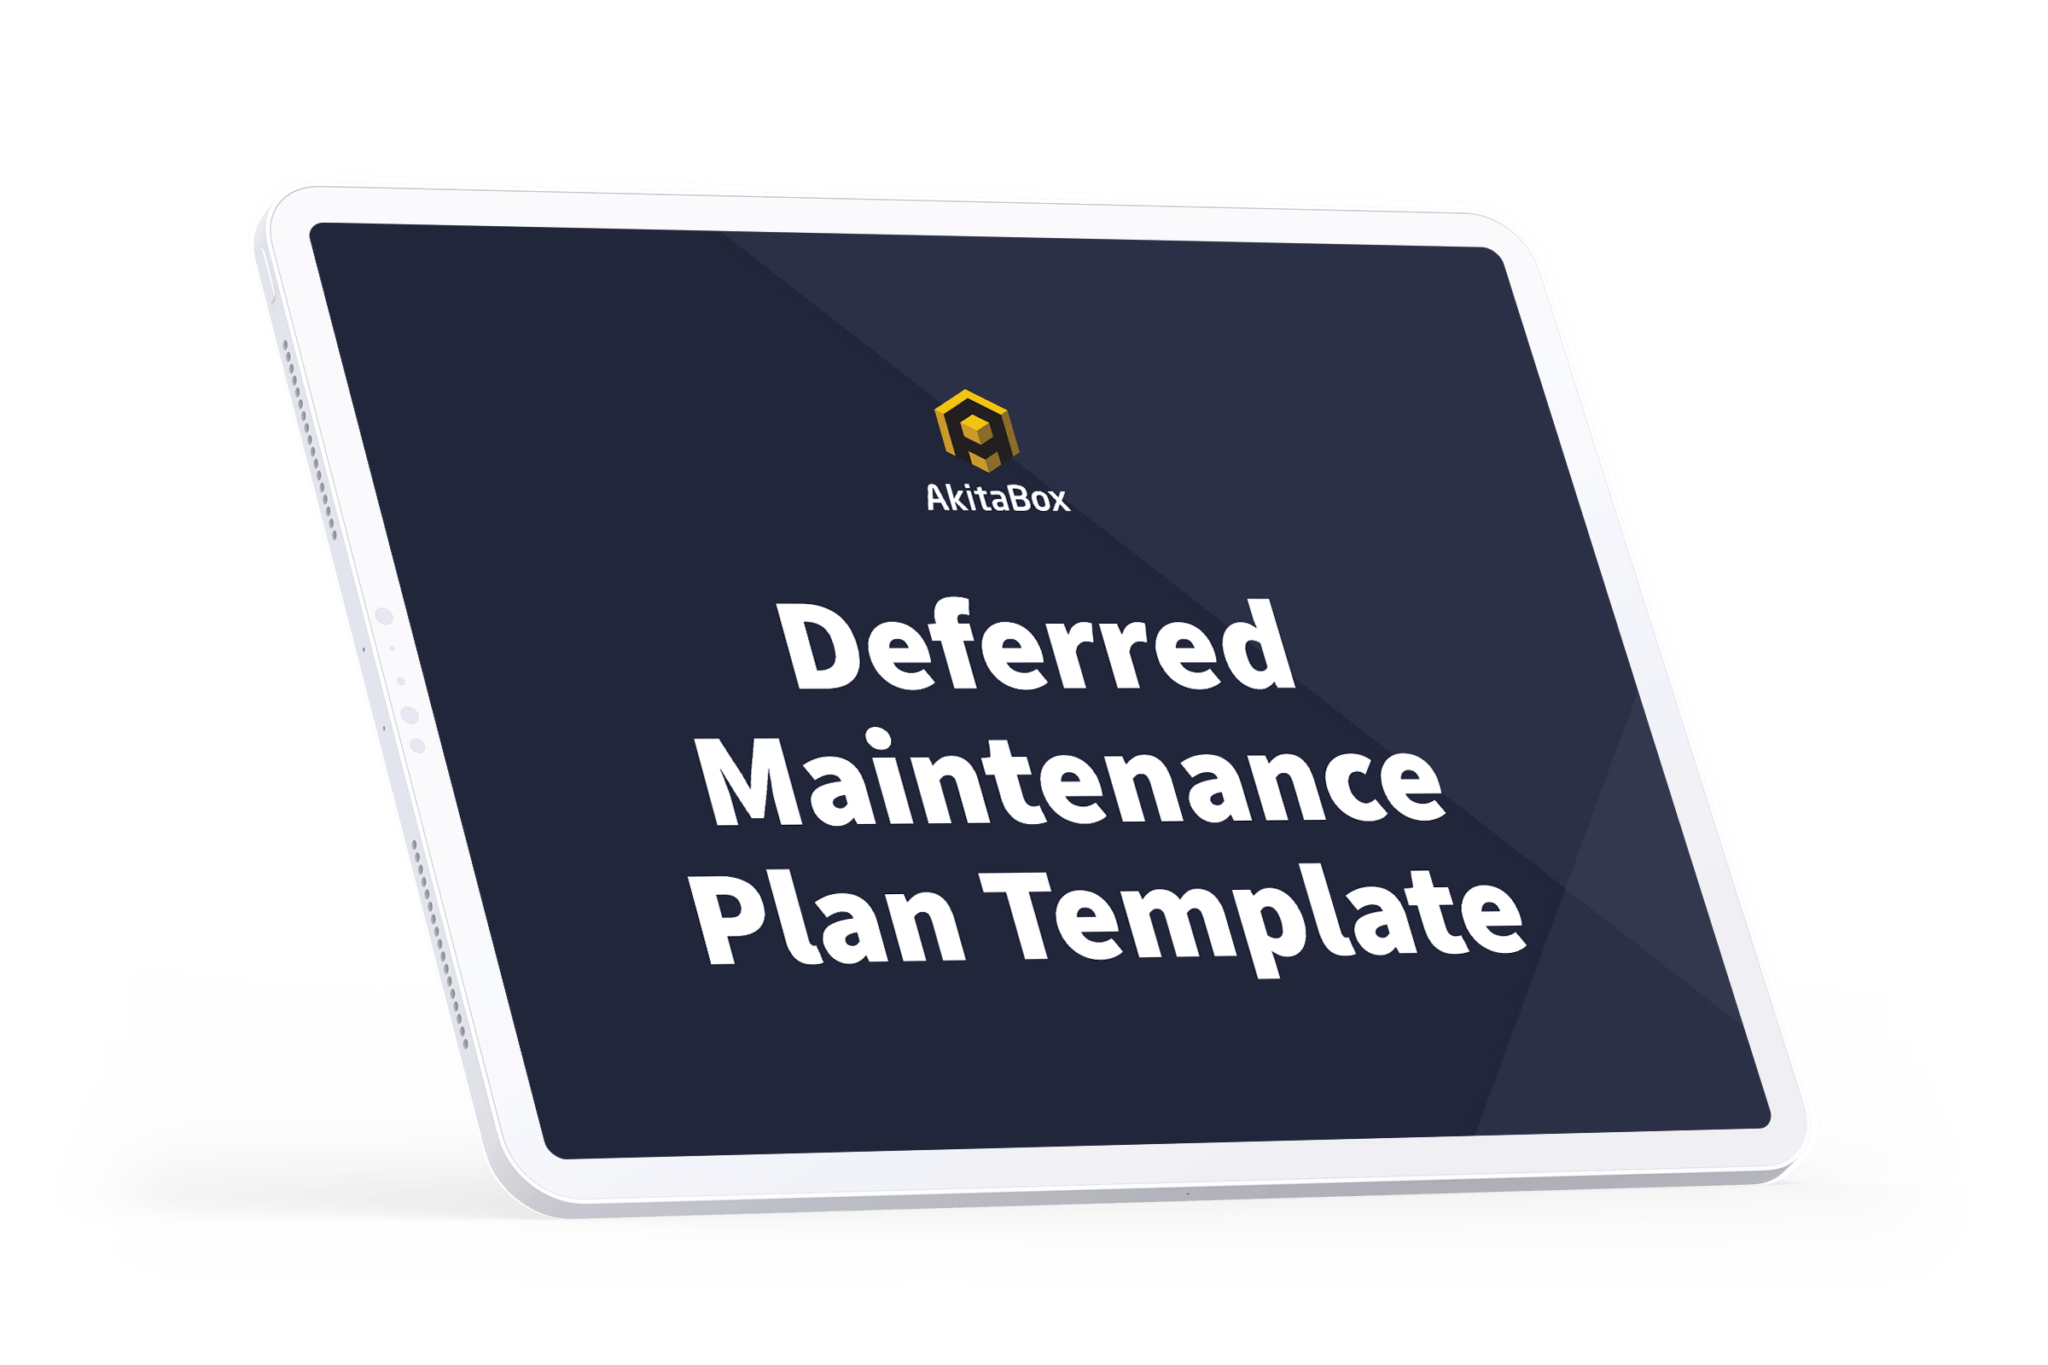 Deferred Maintenance Plan Template Spreadsheet AkitaBox